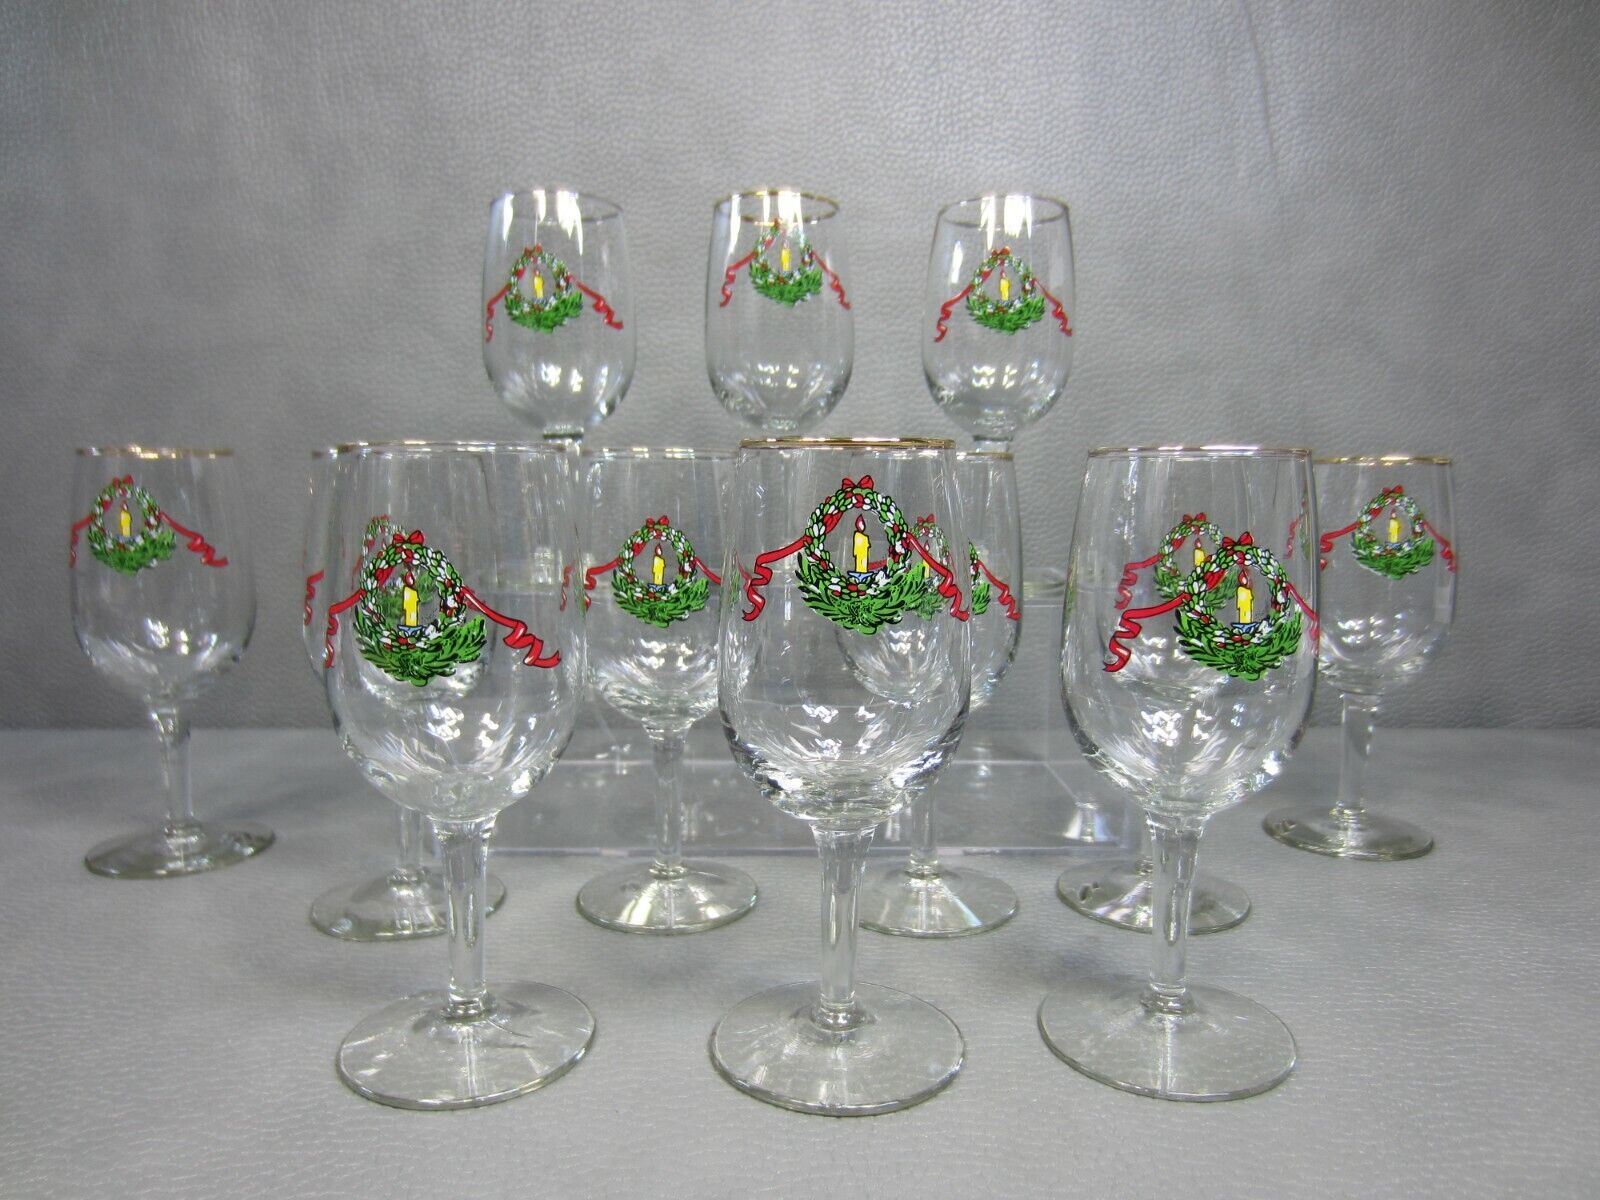 Set of 12 Vintage Christmas Holiday Wreath Stemmed Water Wine Glasses Goblets